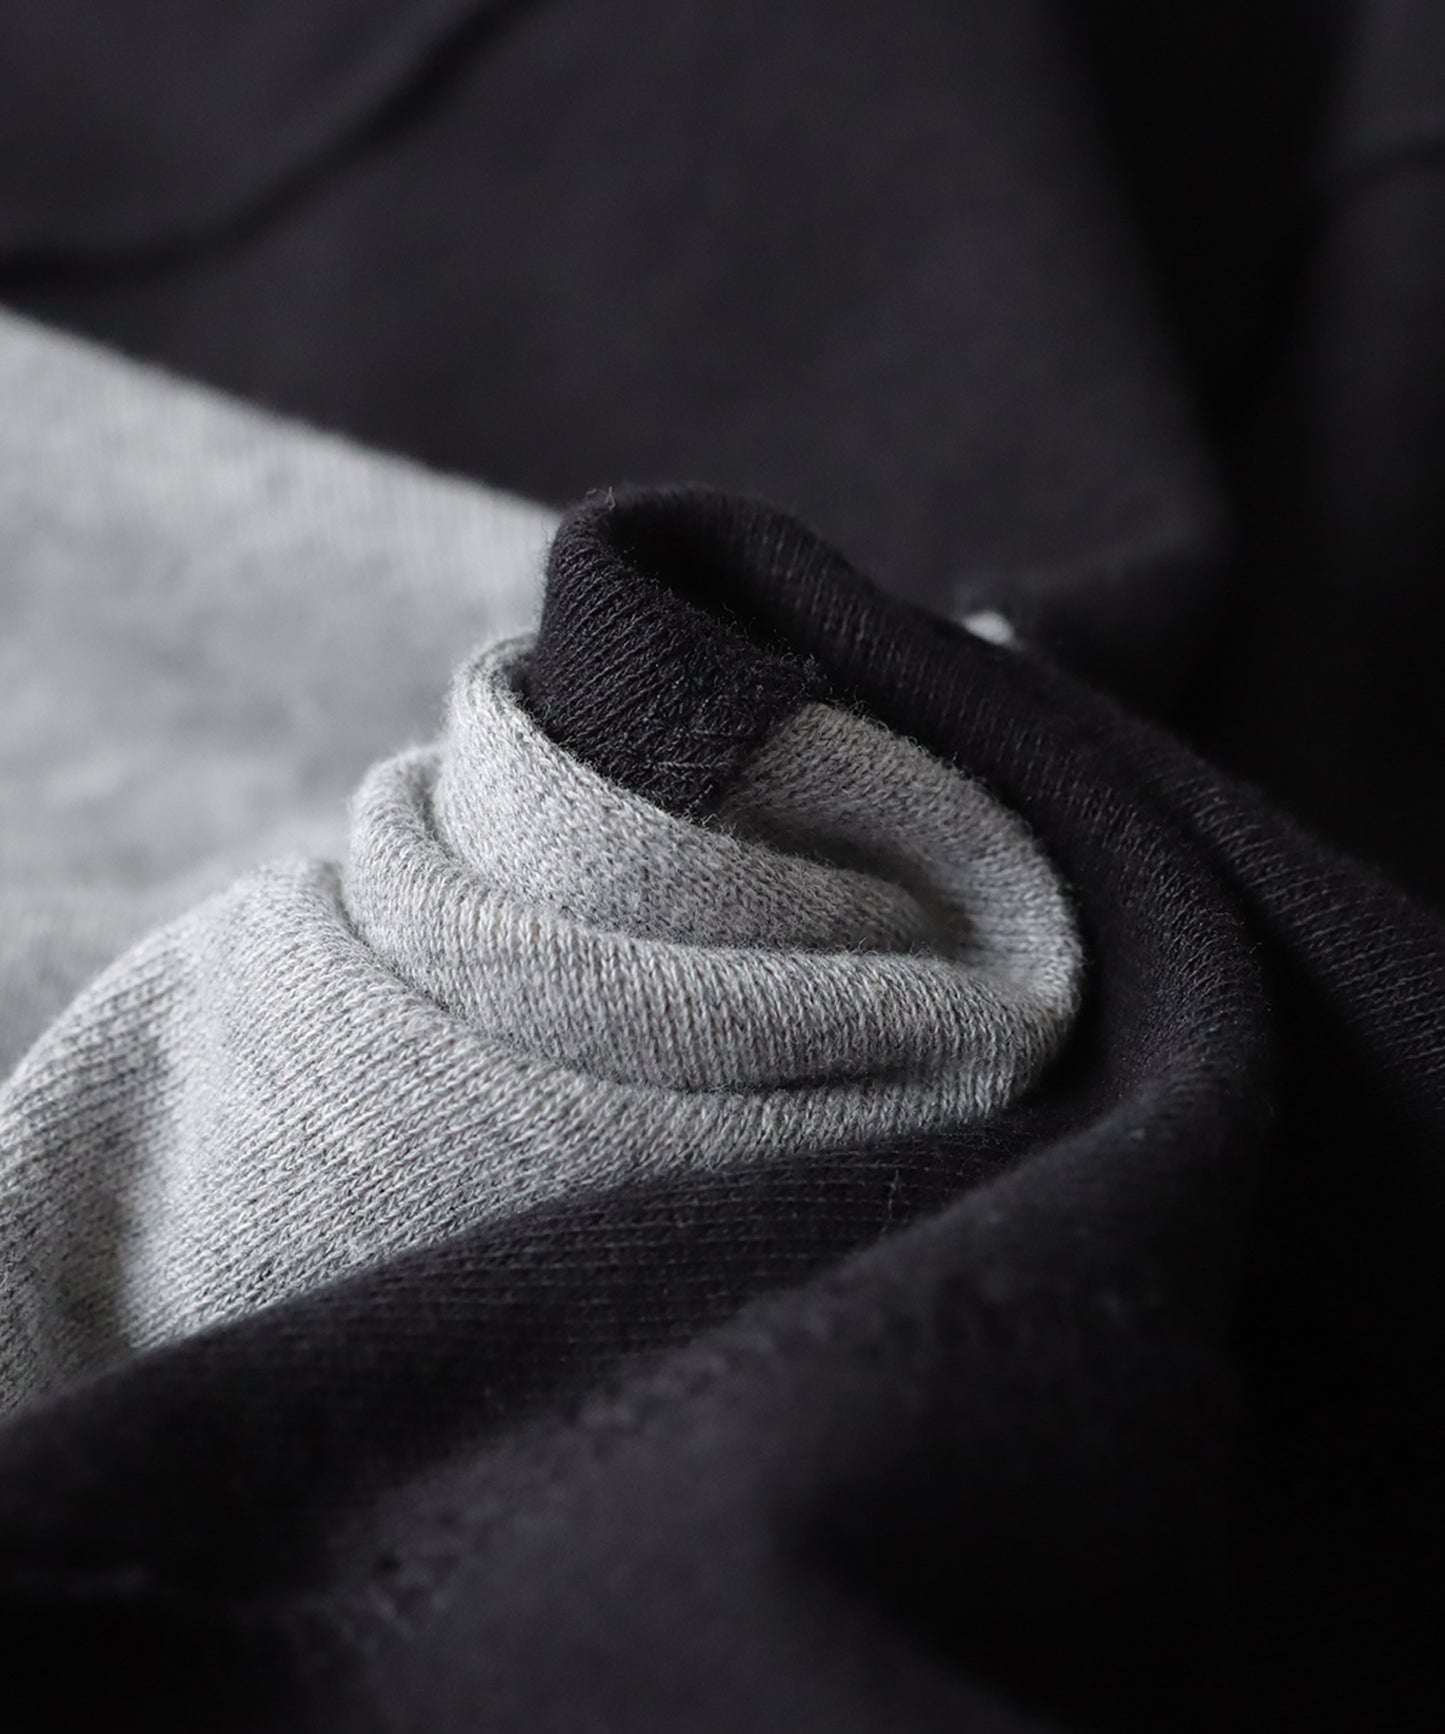 Switching Design Sweatshirt Men's